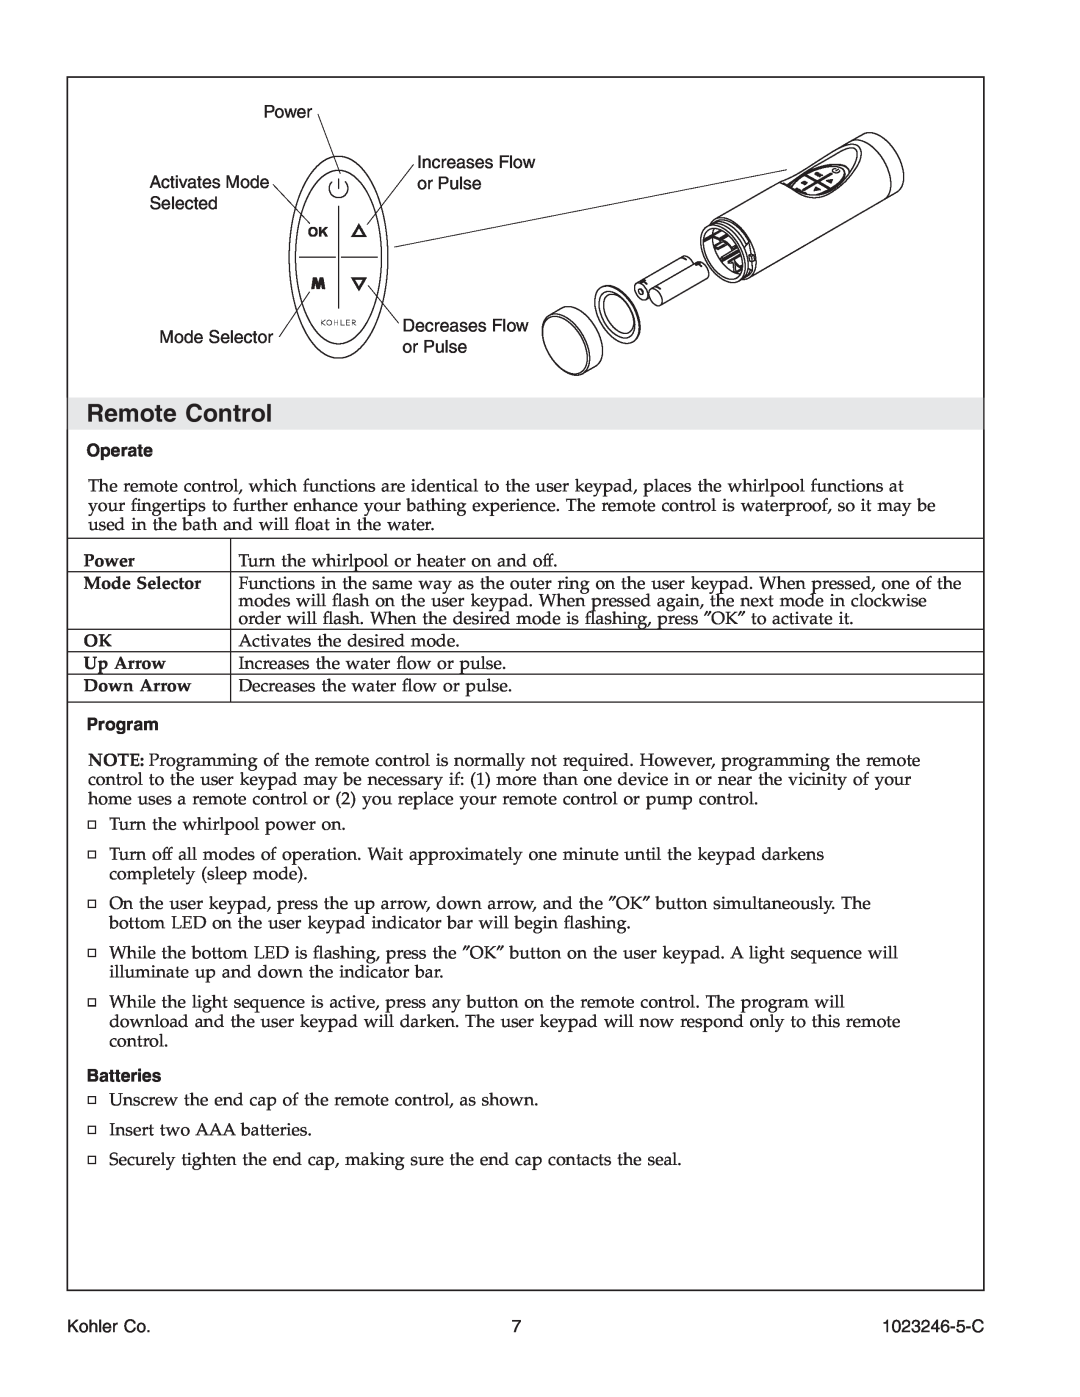 Kohler K-1418-CT manual Remote Control, Operate, Program, Batteries 